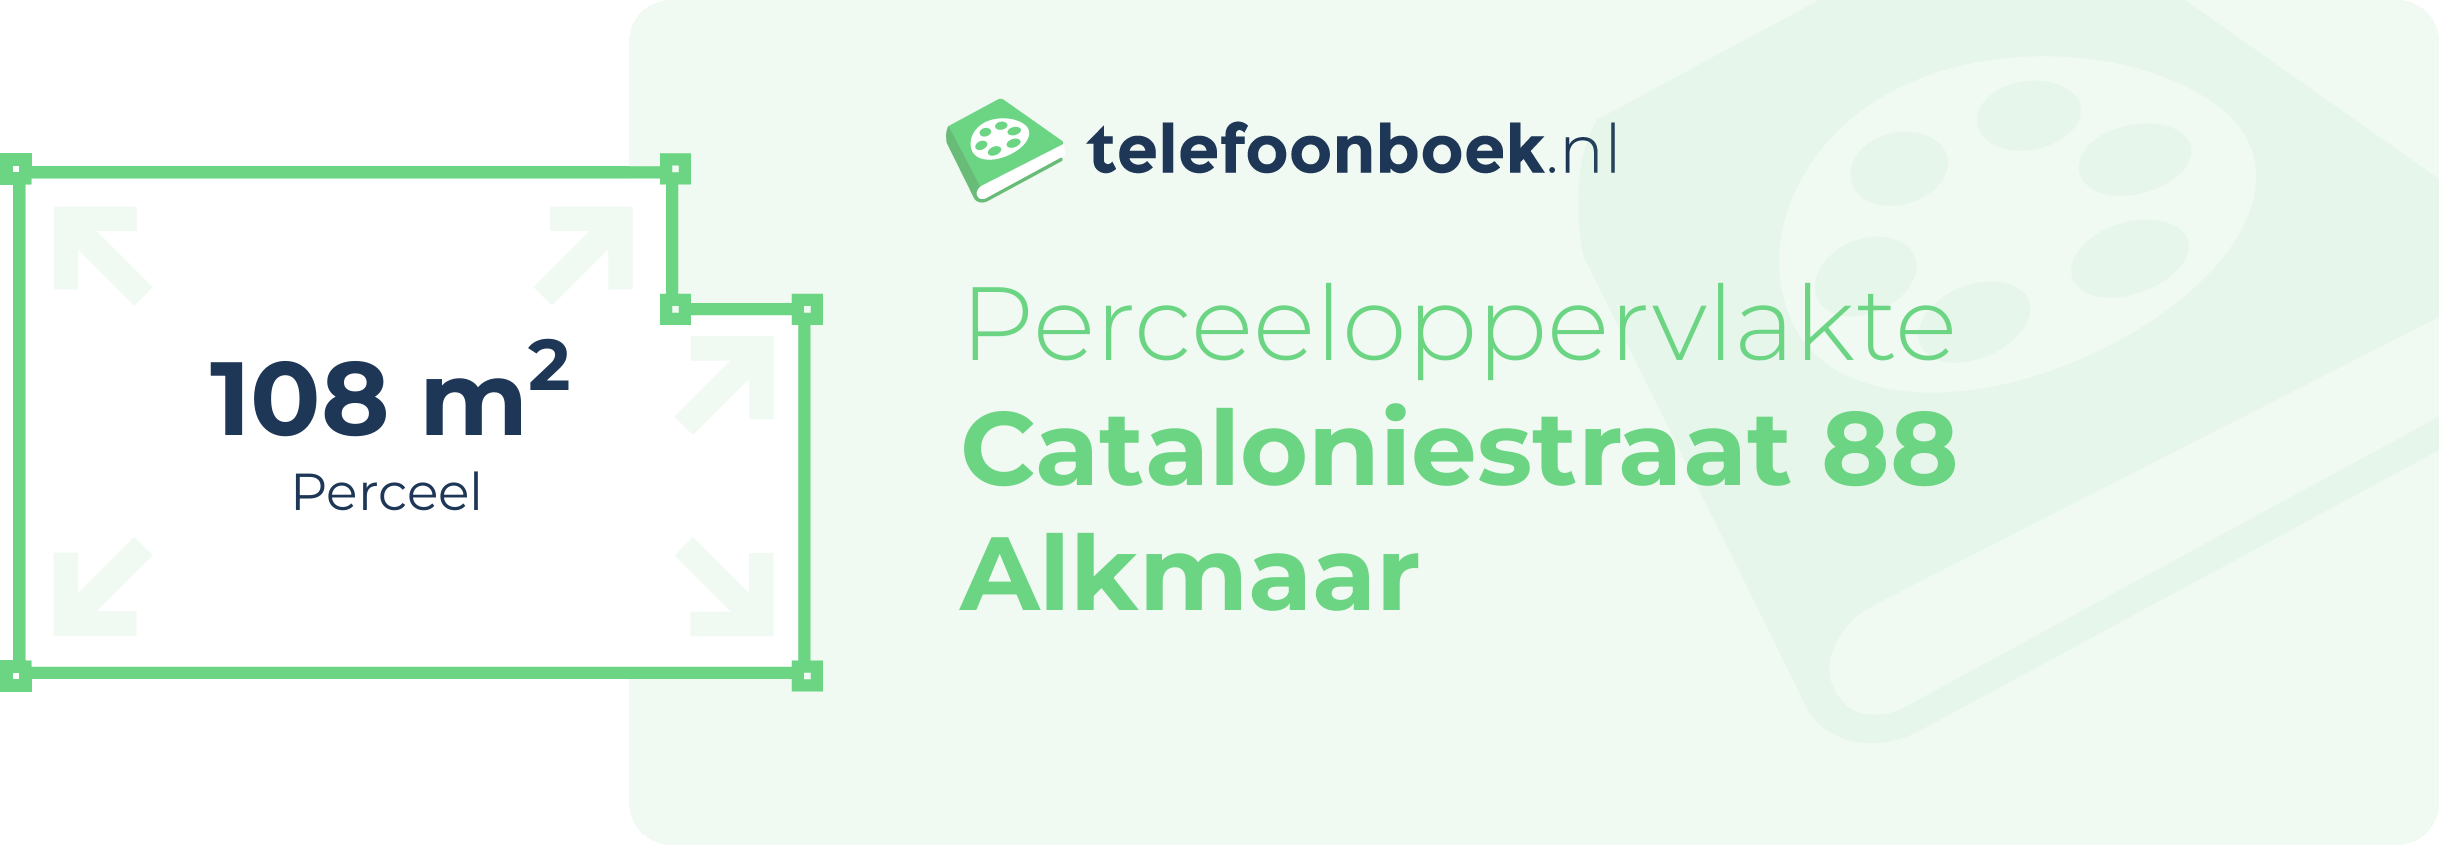 Perceeloppervlakte Cataloniestraat 88 Alkmaar